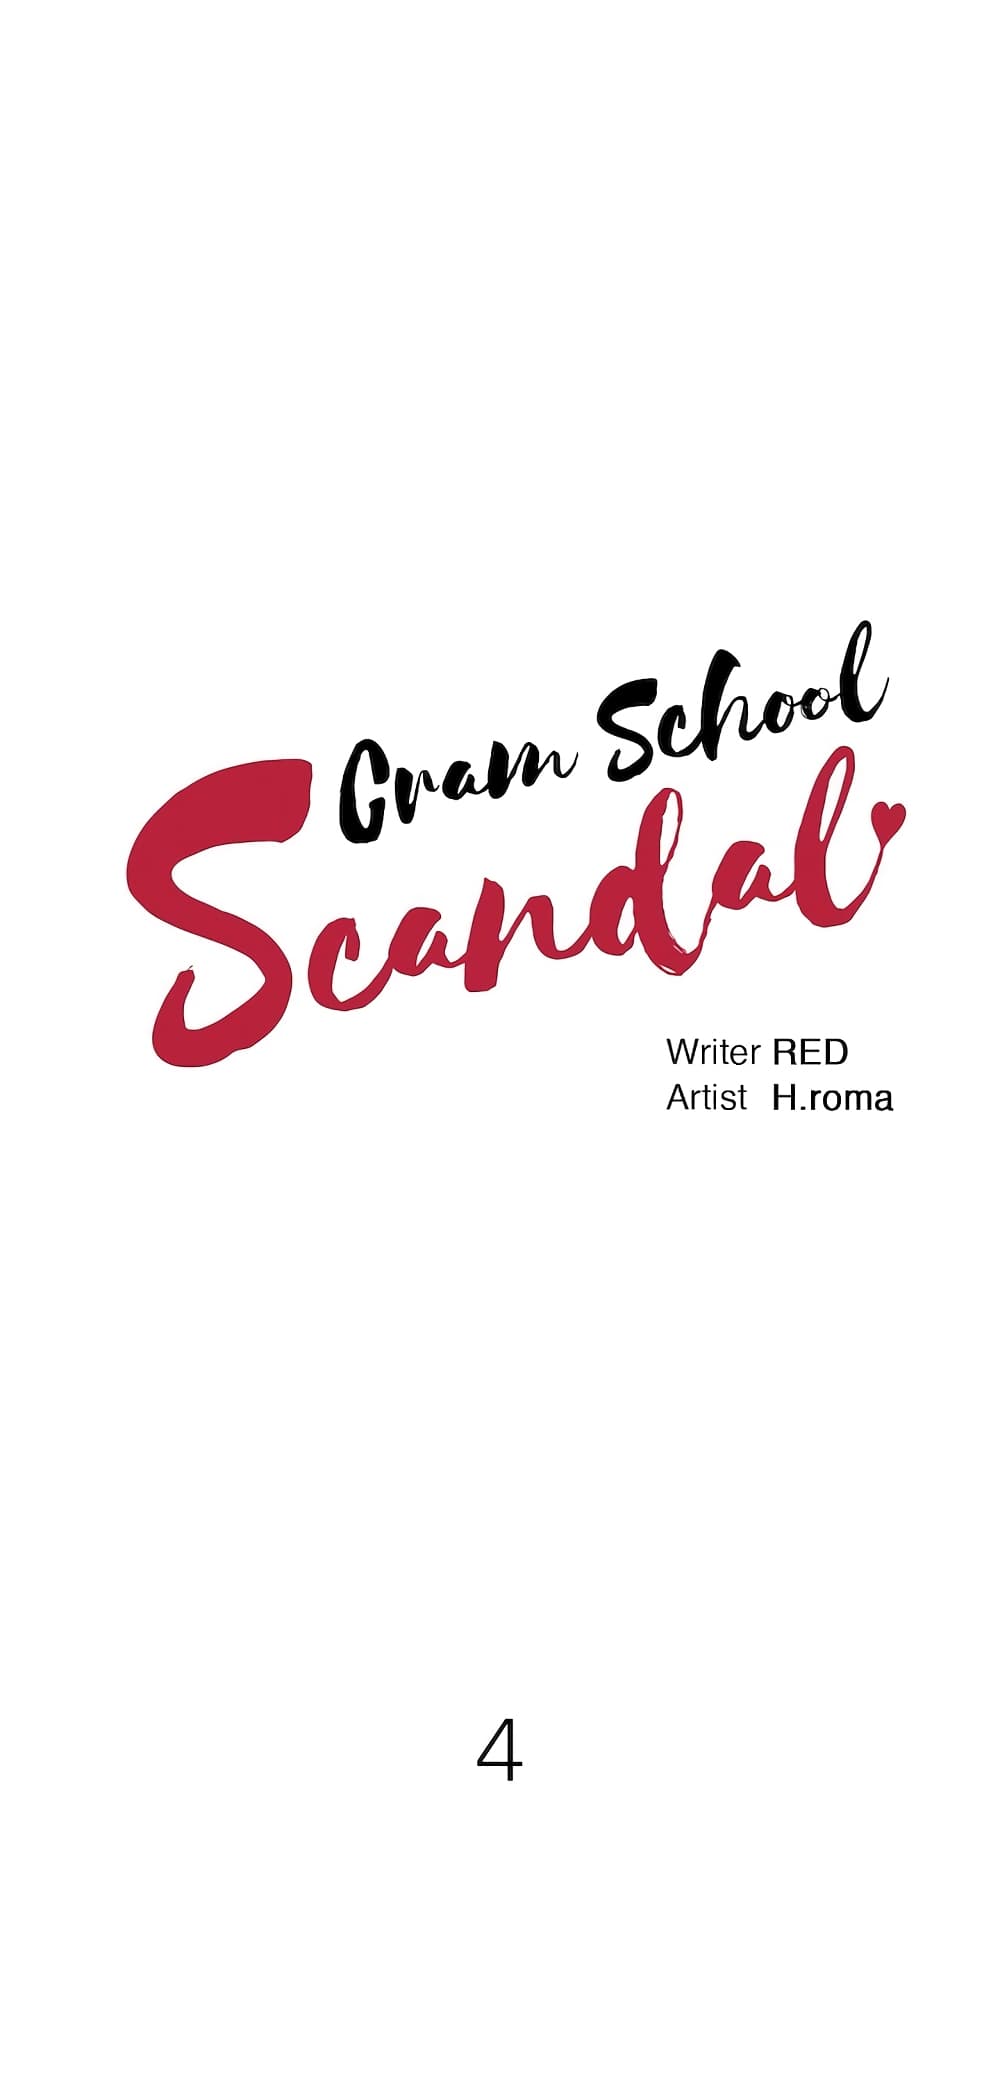 Cram School Scandal 4-4